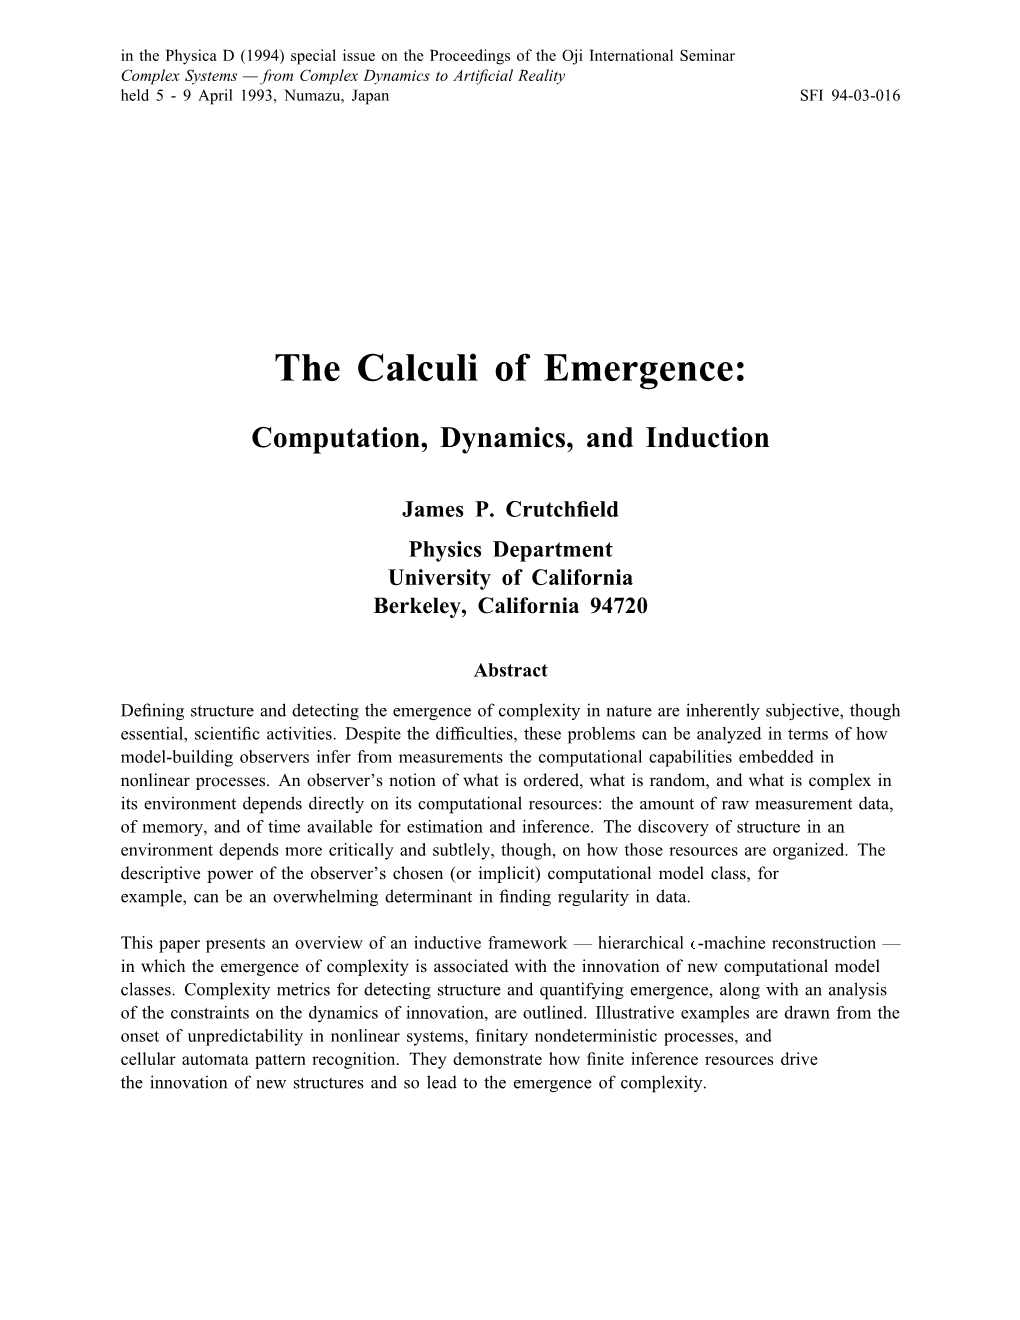 The Calculi of Emergence